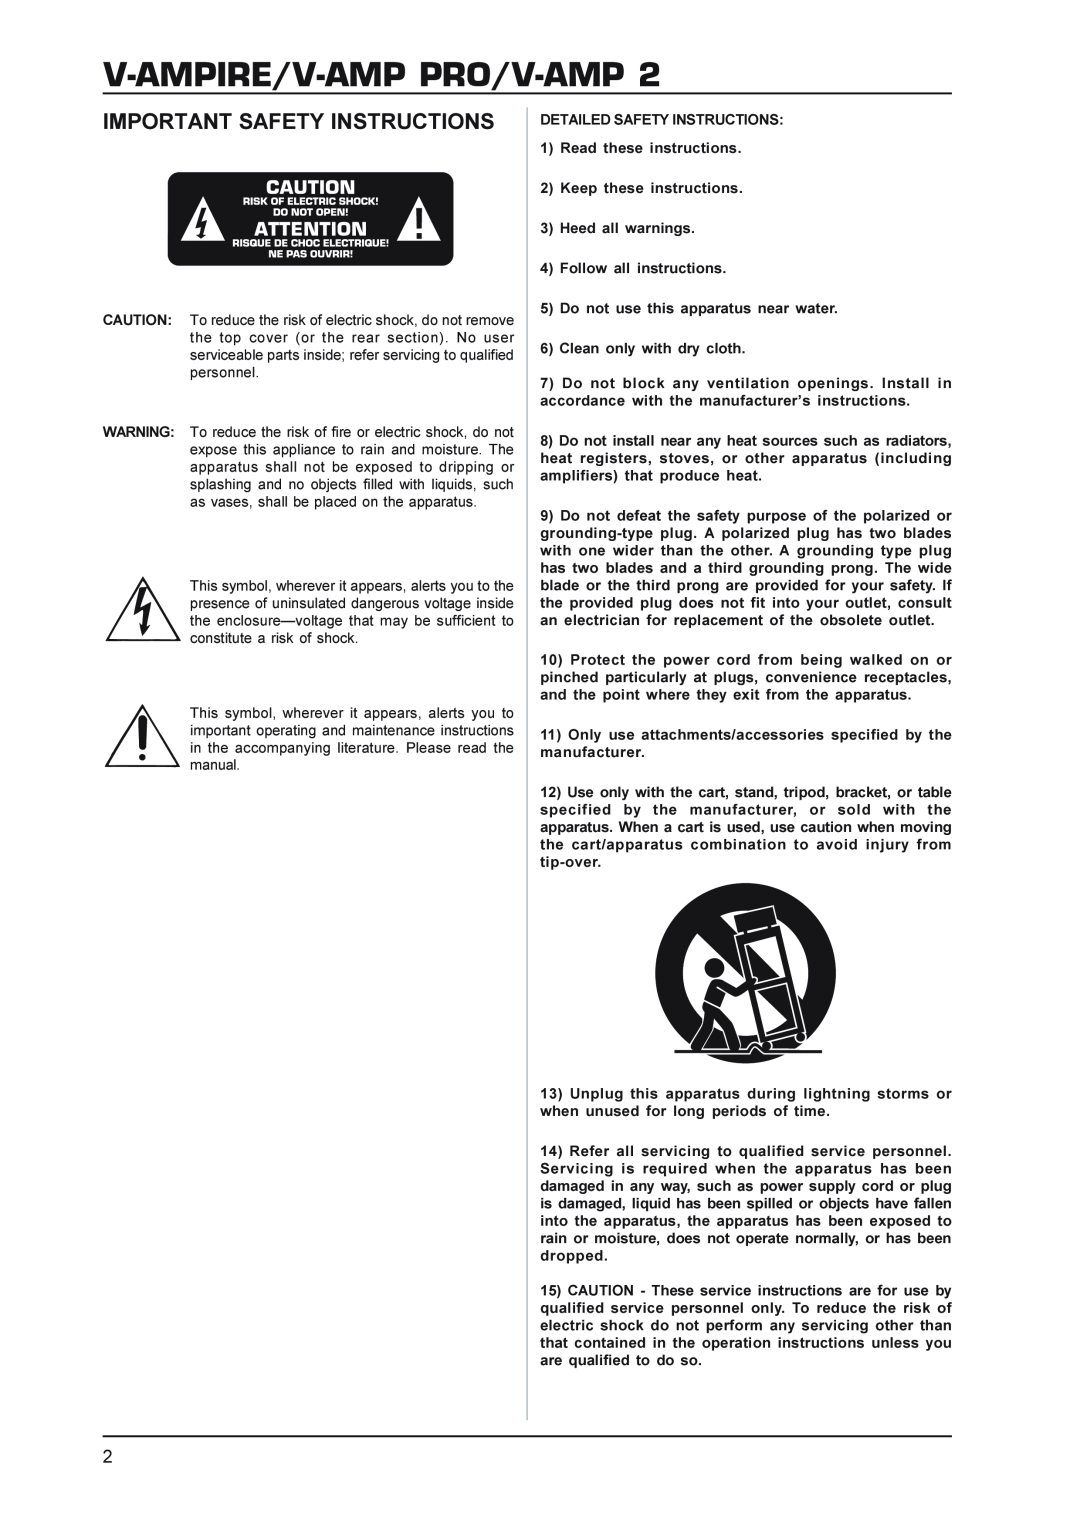 Mesa/Boogie V-AMPPRO manual V-AMPIRE/V-AMP PRO/V-AMP2, Important Safety Instructions 